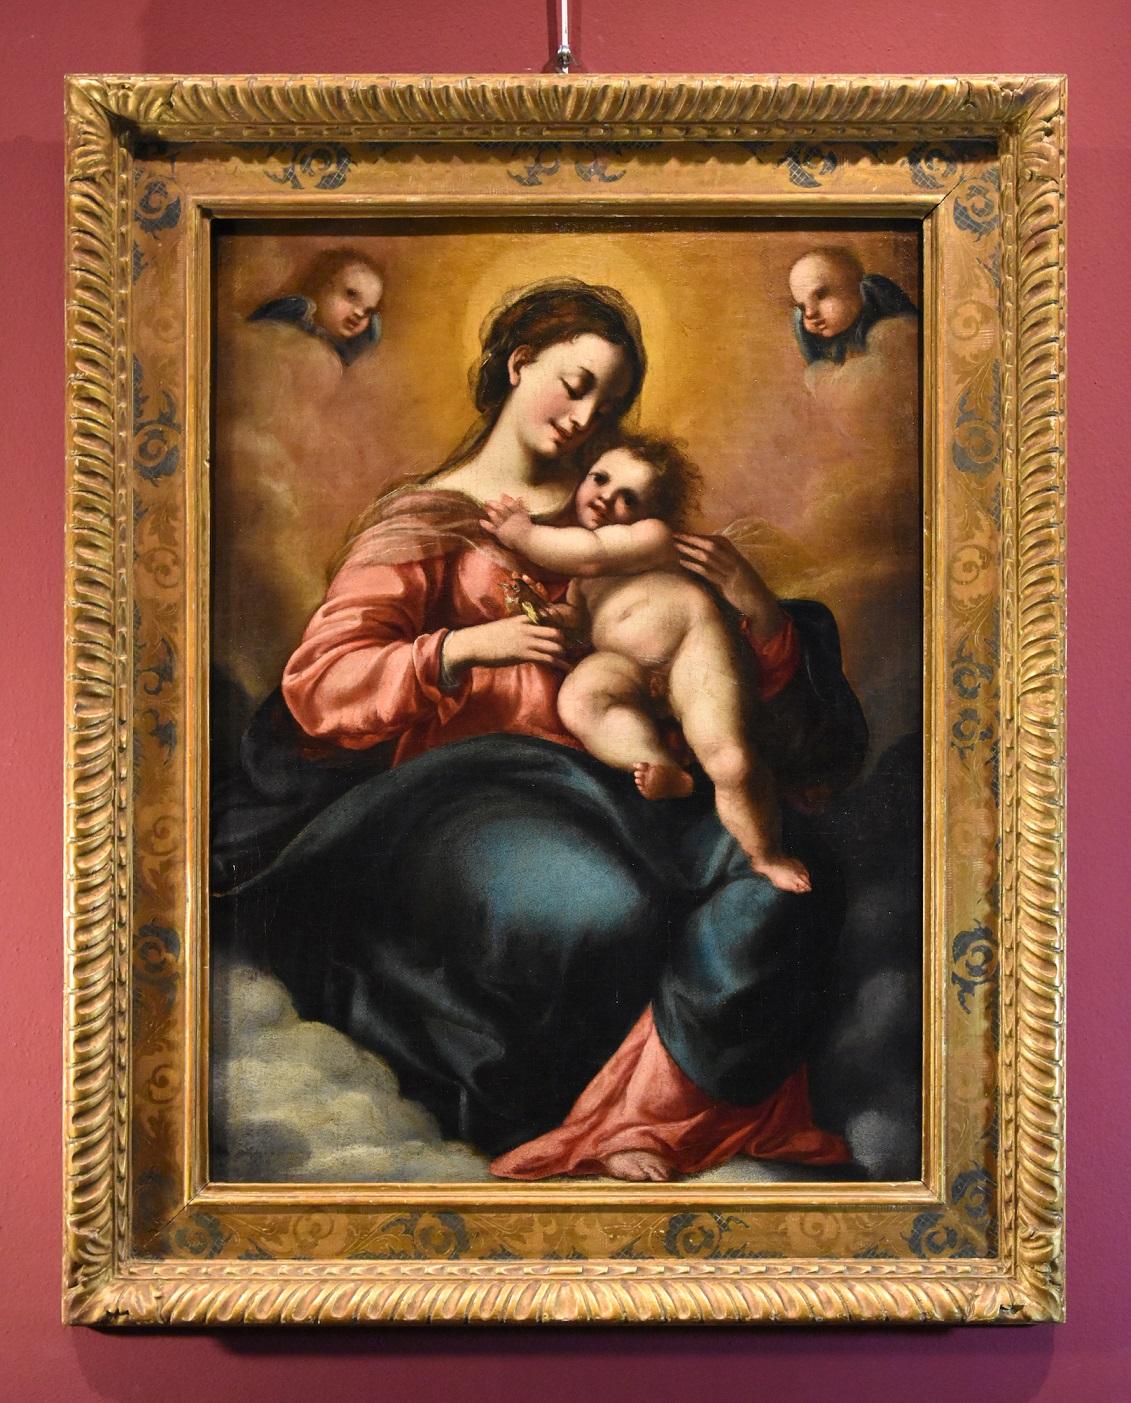 Jacopo Confortini (Florence 1602-1672) Portrait Painting – Confortini Maria Madonna Engel Gemälde Öl auf Leinwand Alter Meister 17. Jahrhundert Italien